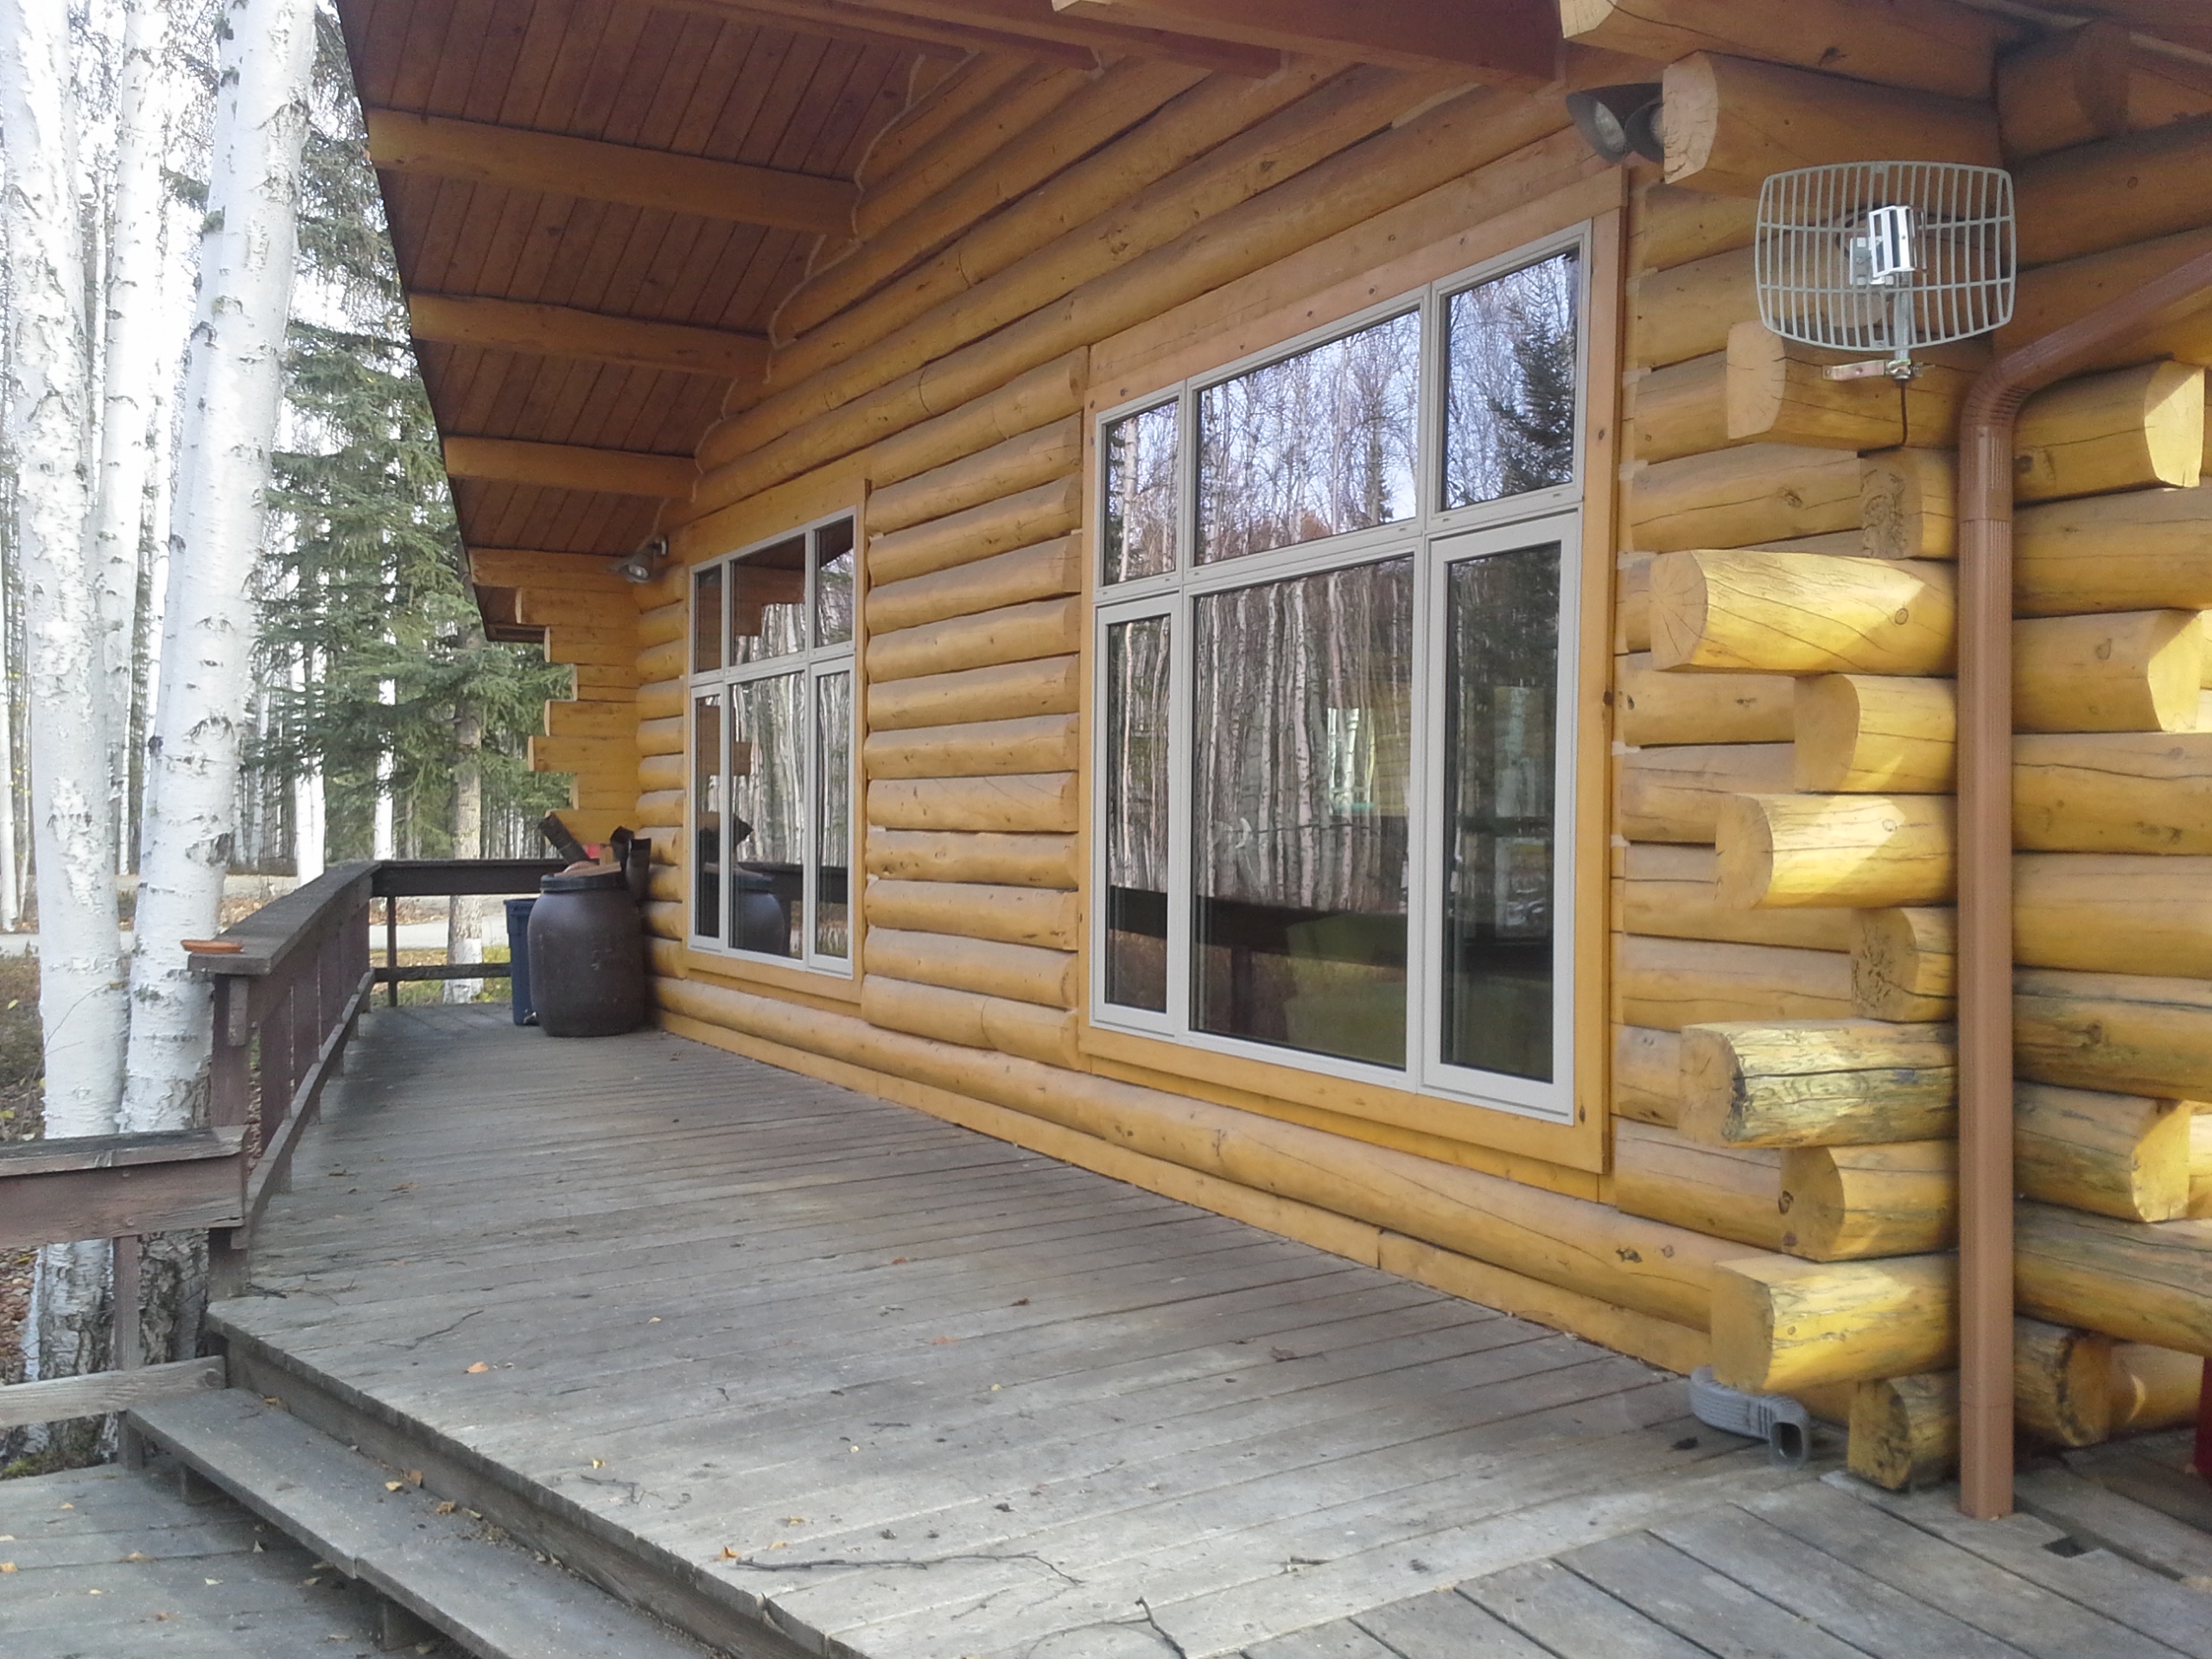 Alaskan log home with new large windows